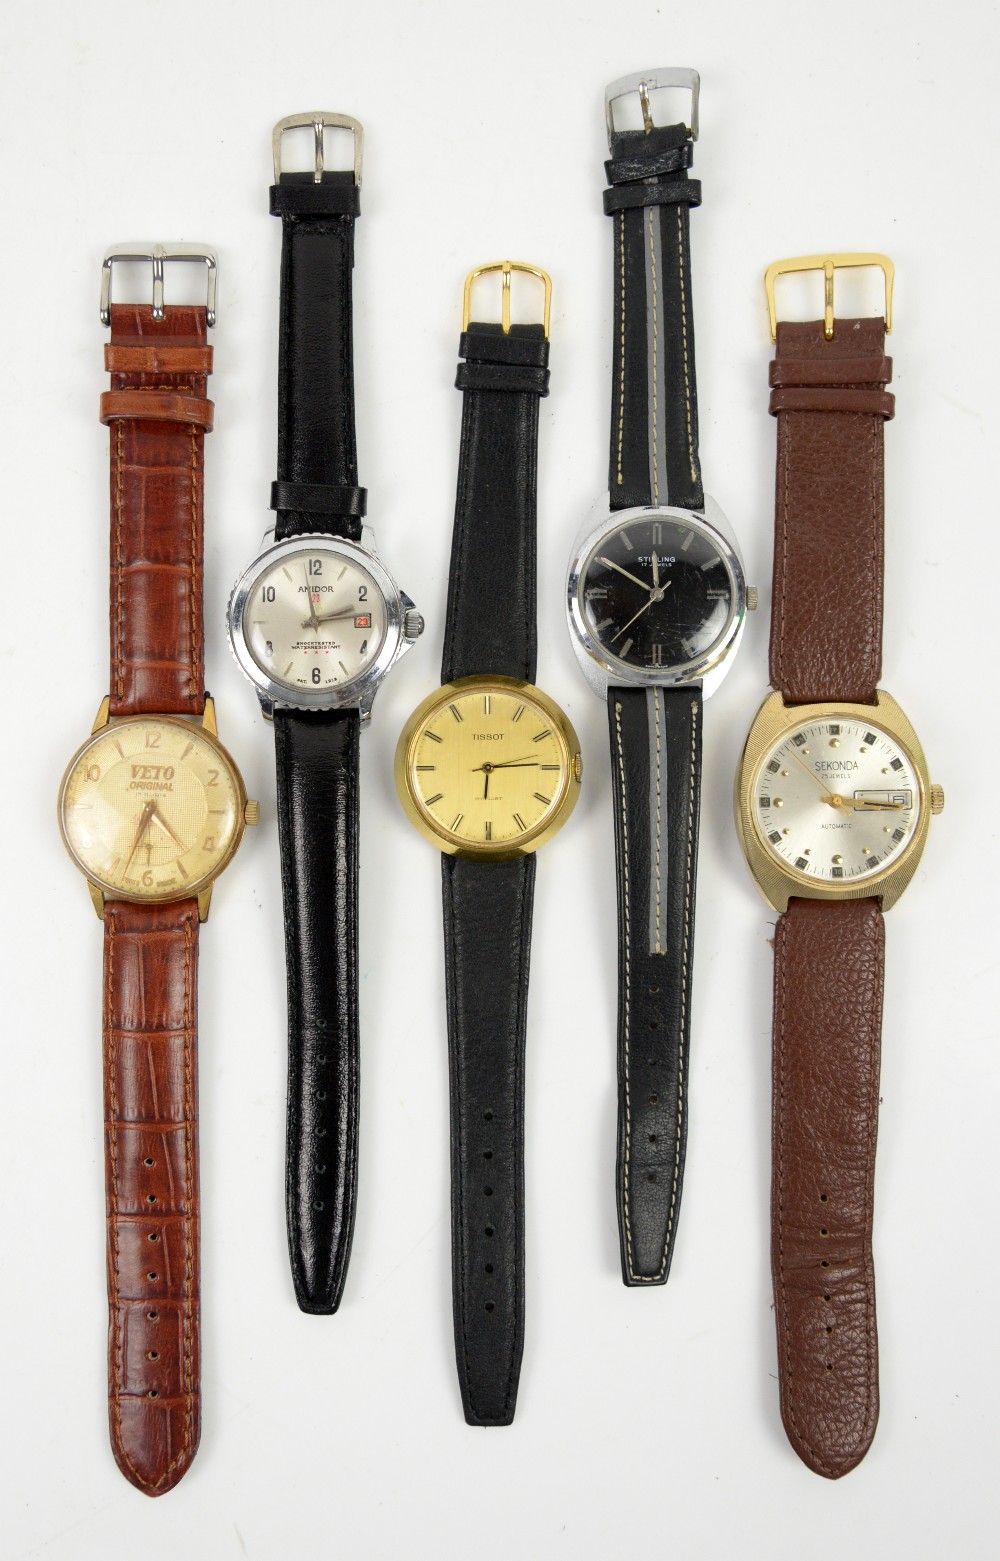 Sekonda 25 jewel automatic wristwatch, Tissot Stylist watch, Veto Original 17 rubis watch,